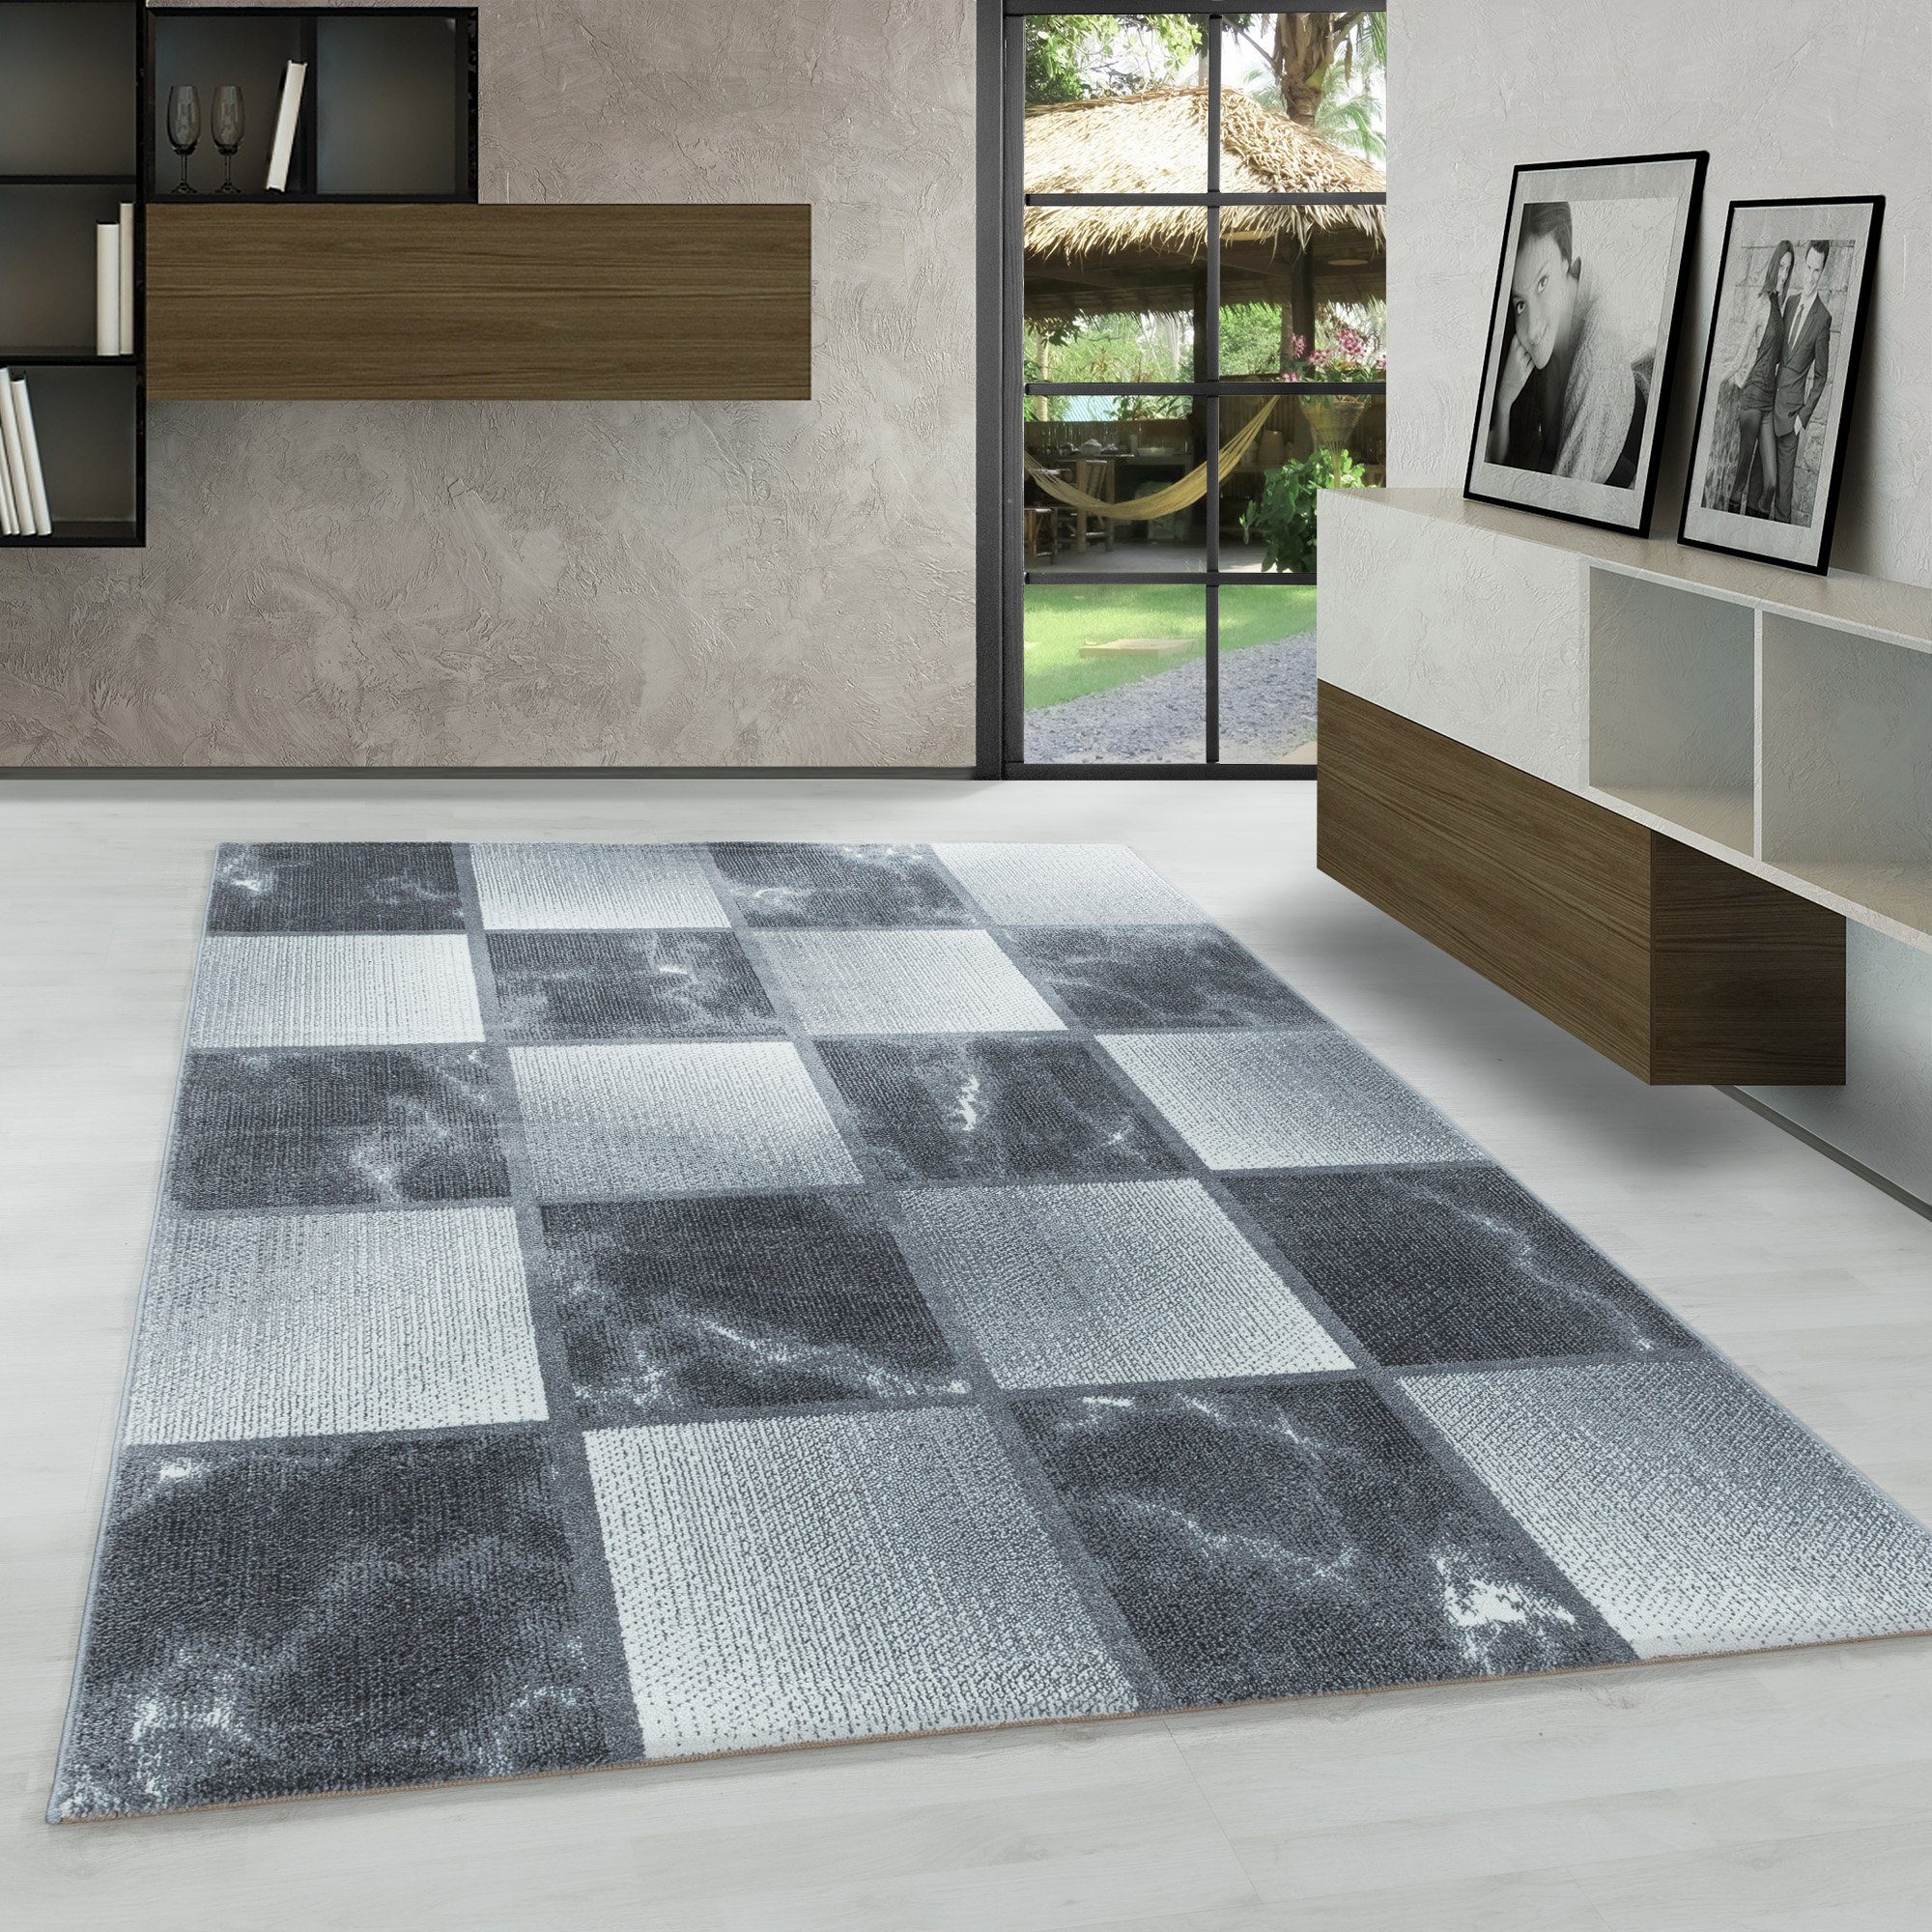 Frisé-Teppich Kariert Design, Carpetsale24, Läufer, Höhe: 8 mm, Modern Kurzflor Teppich Wohnzimmer Kariert Design verschidene größen